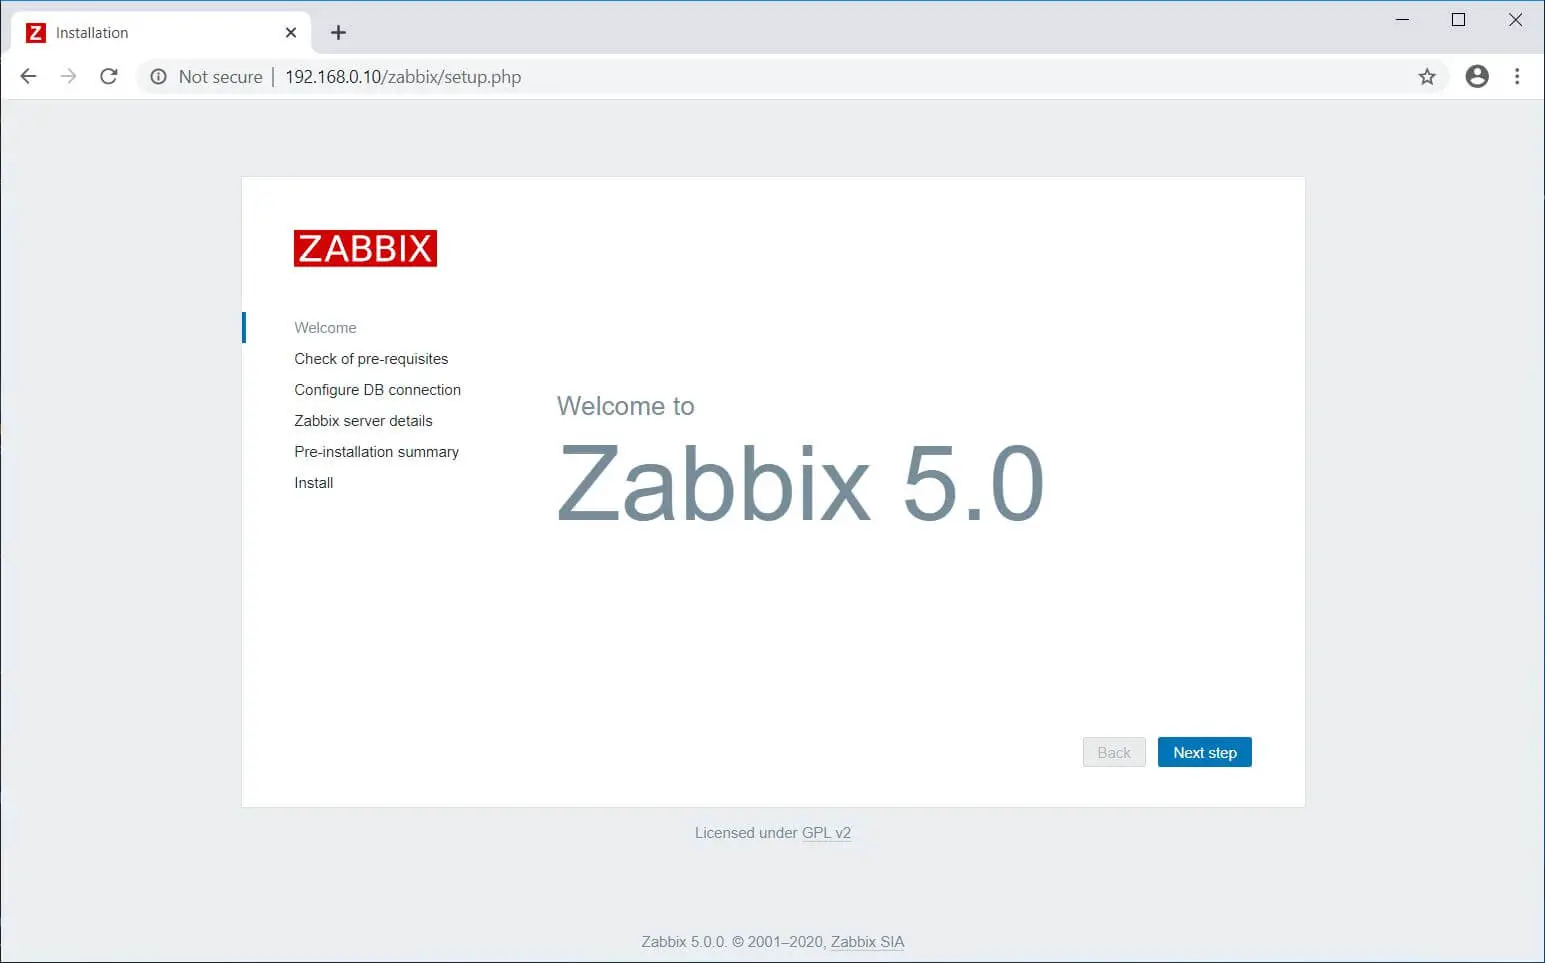 Zabbix 5.0 Welcome Screen